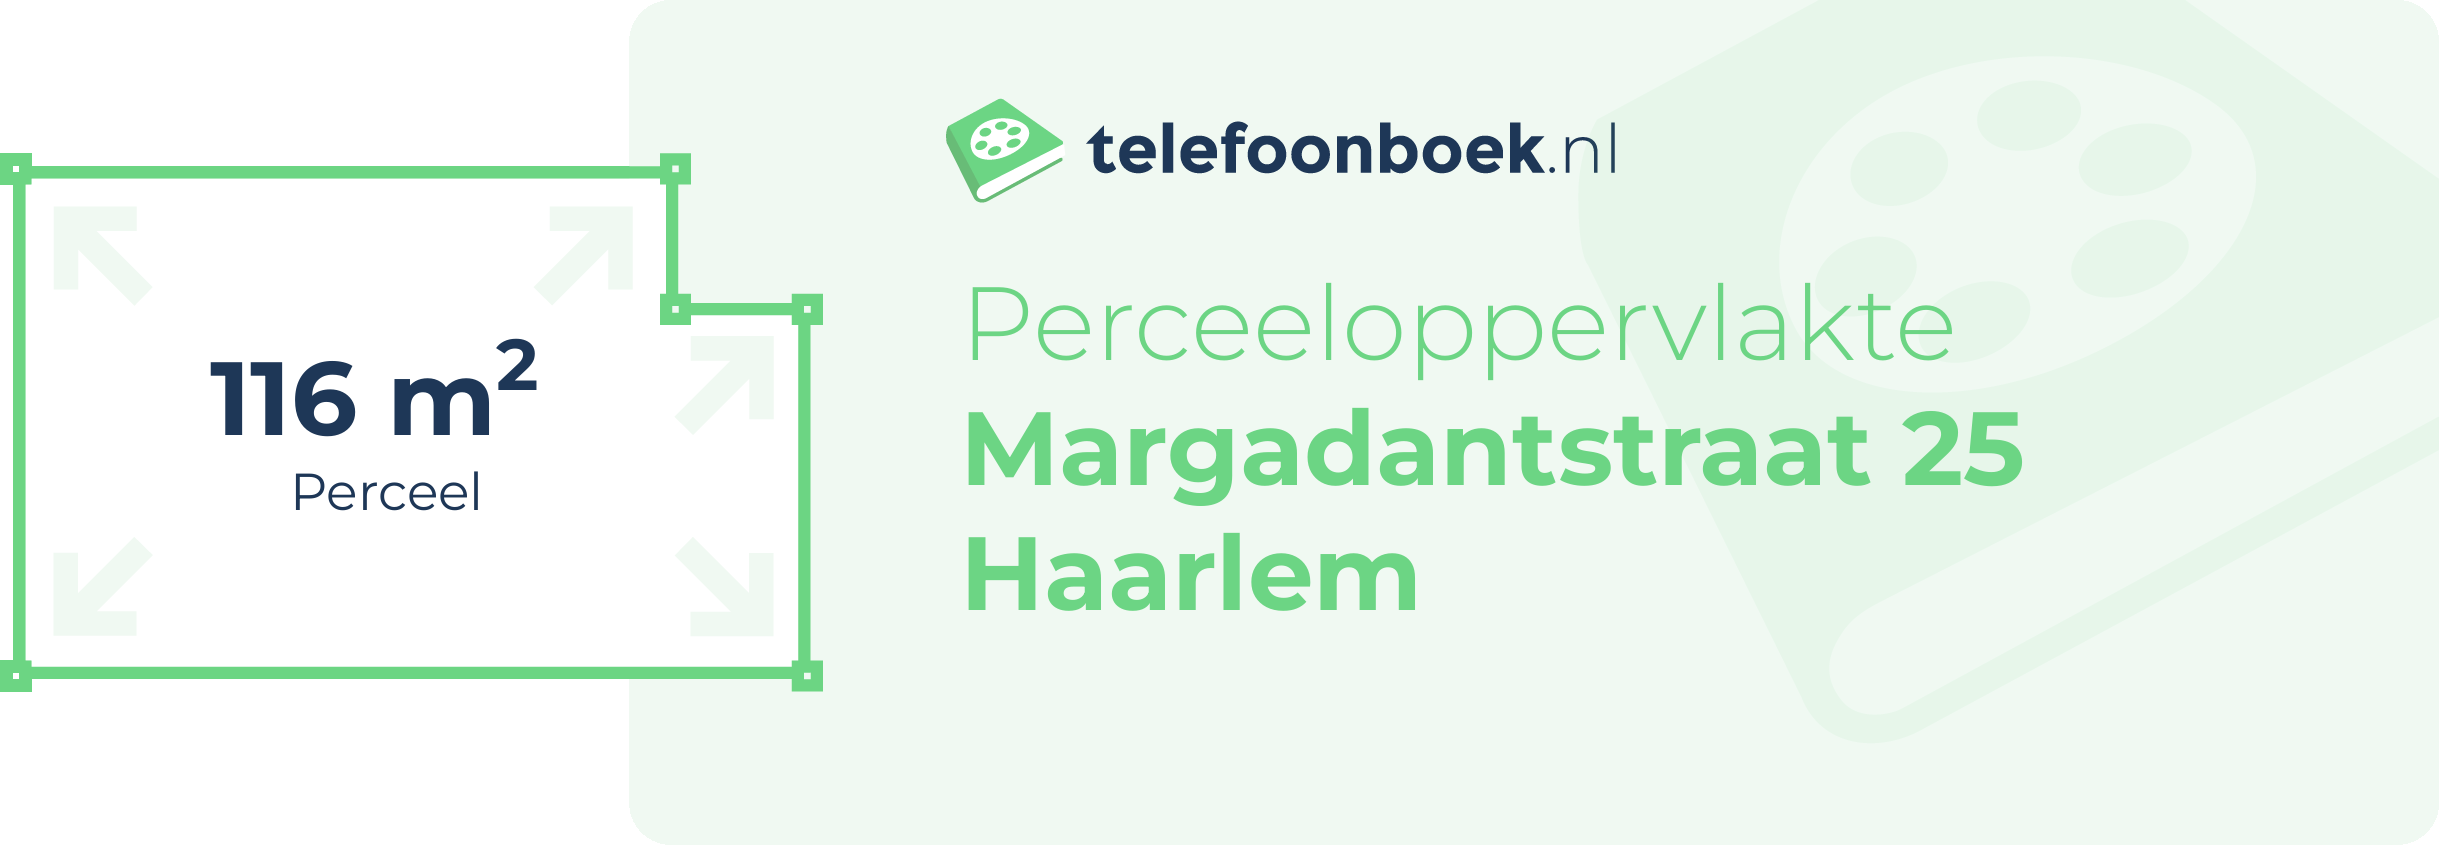 Perceeloppervlakte Margadantstraat 25 Haarlem